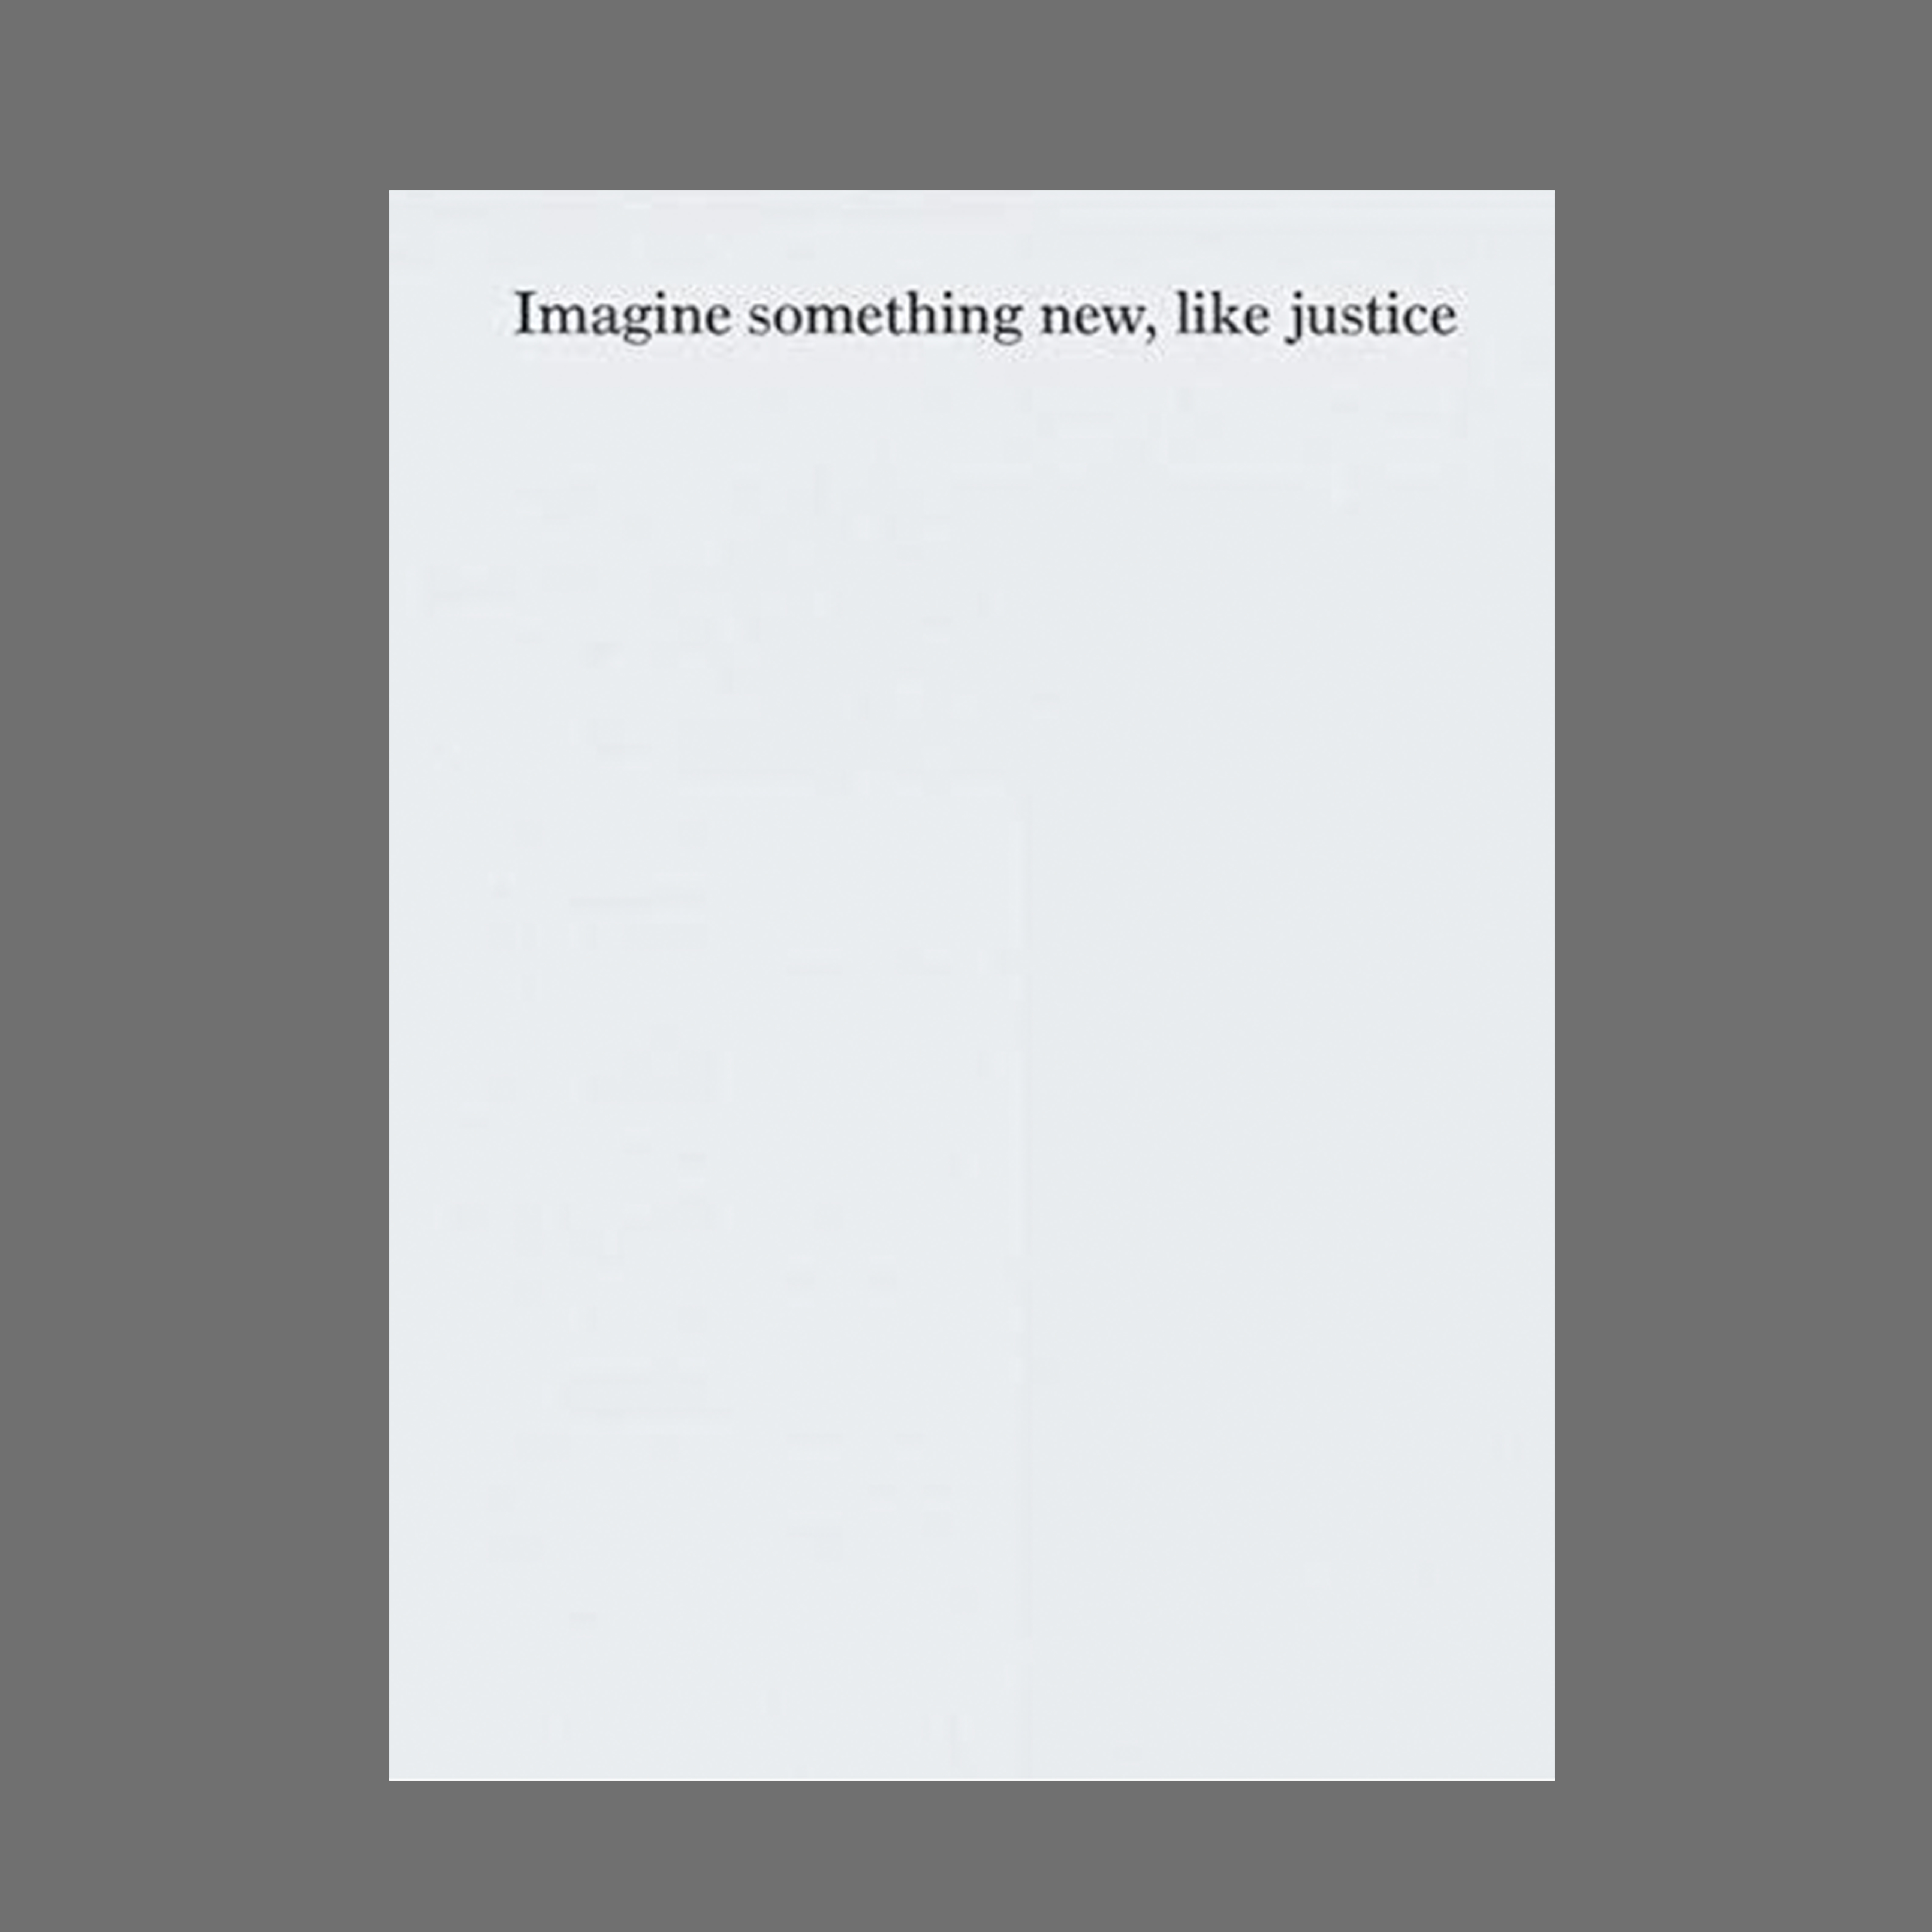 Imagine something new, like justice